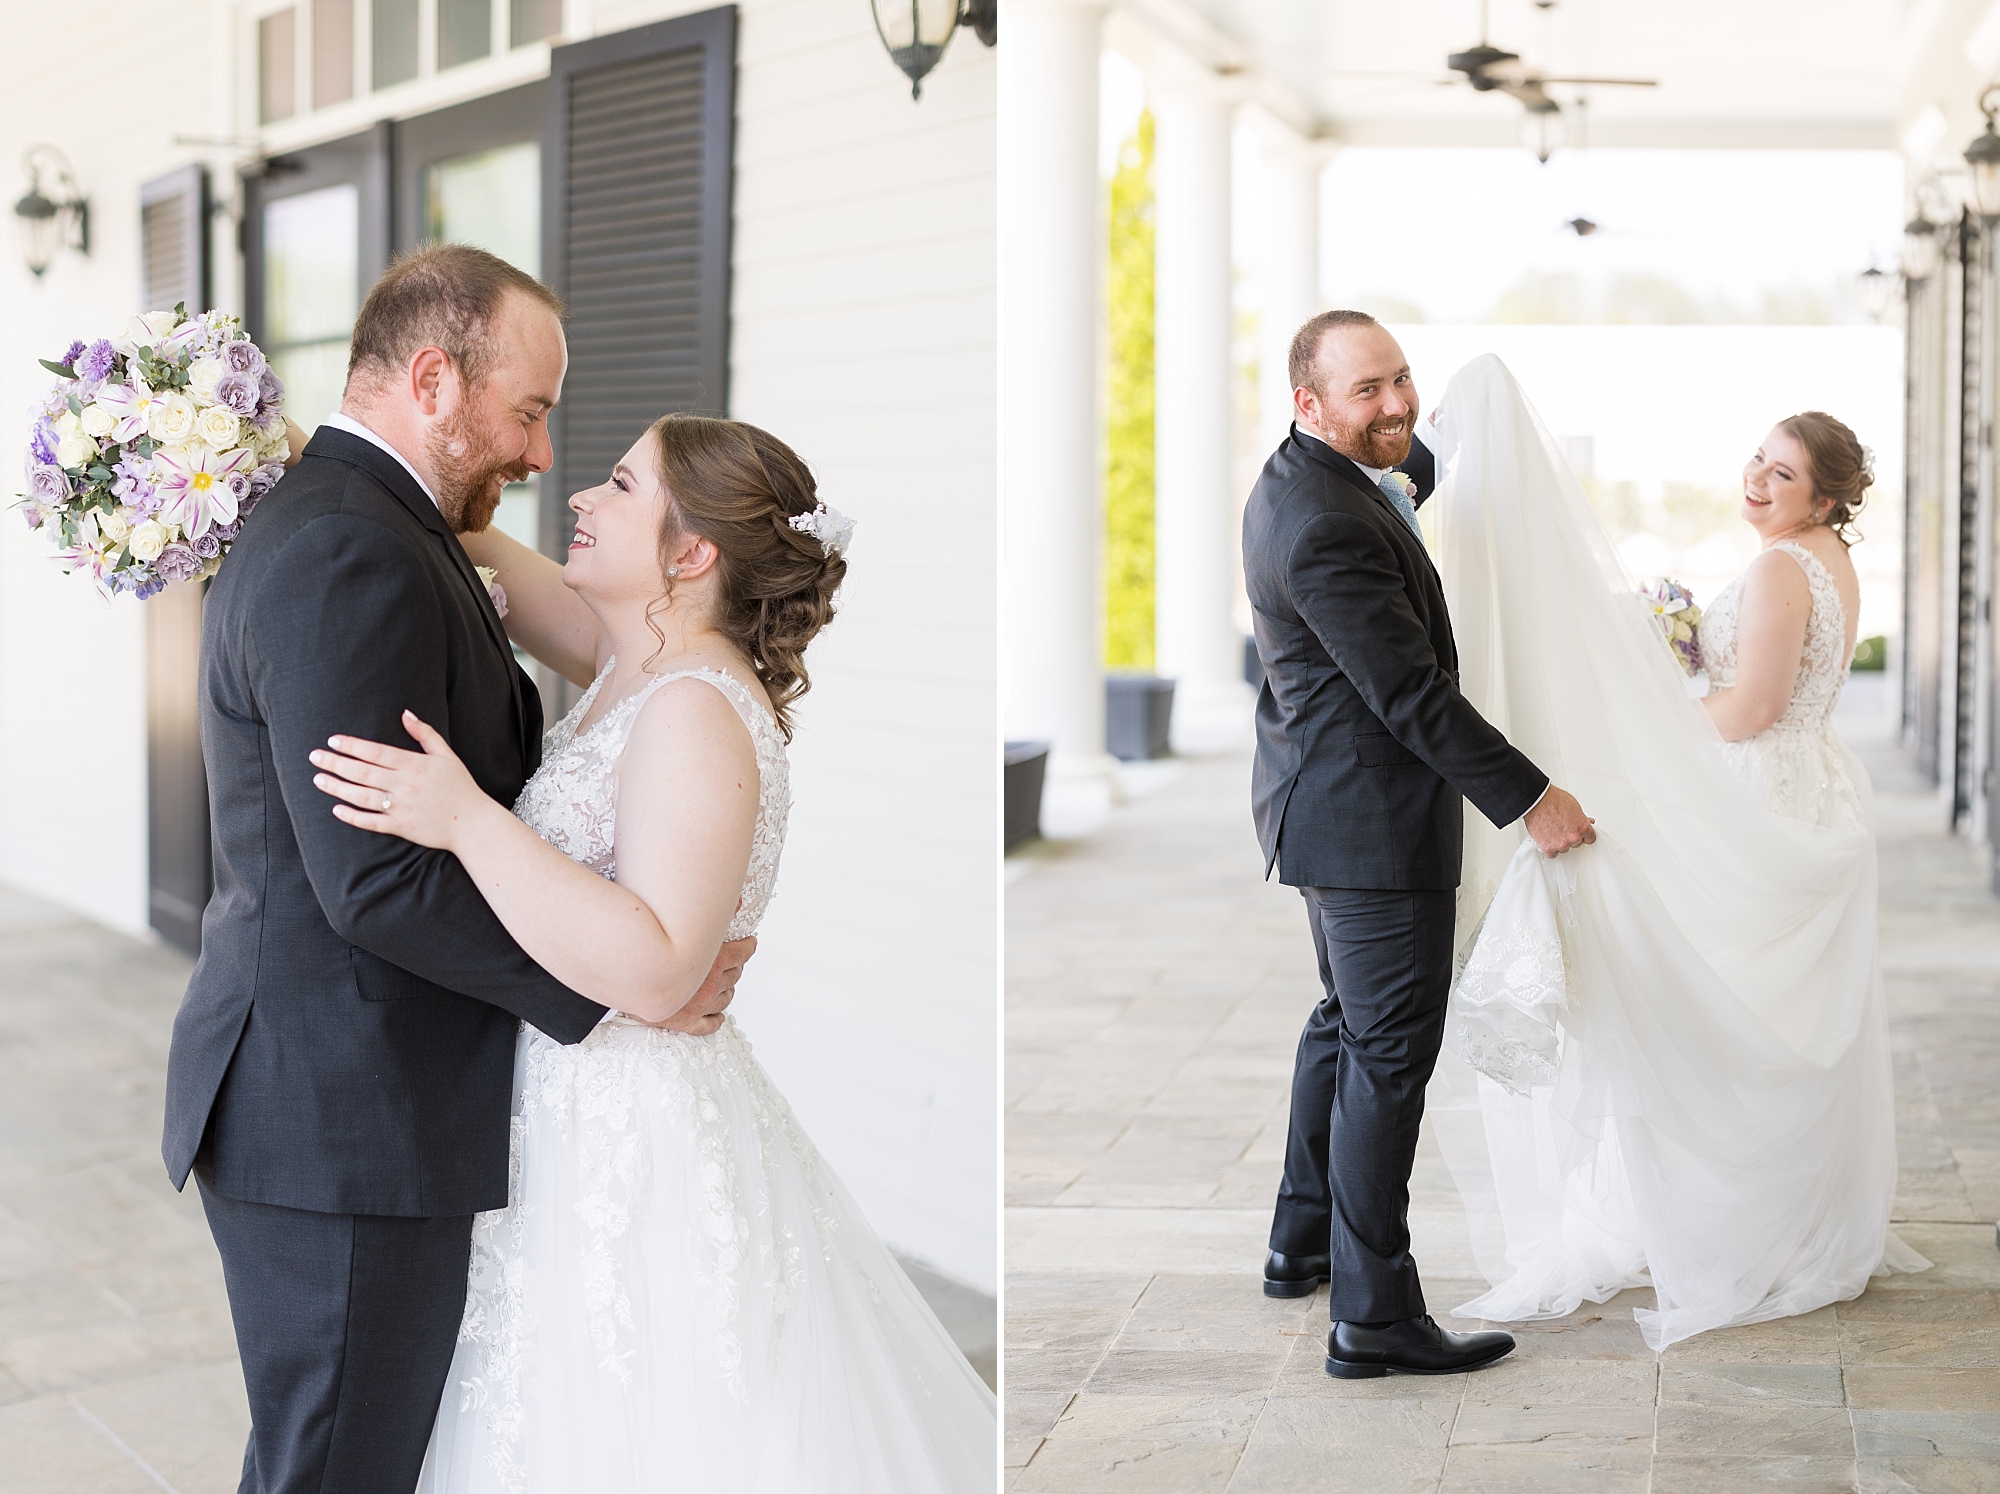 Bride and groom embracing - Raleigh NC Wedding Photographer - Sarah Hinckley Photography